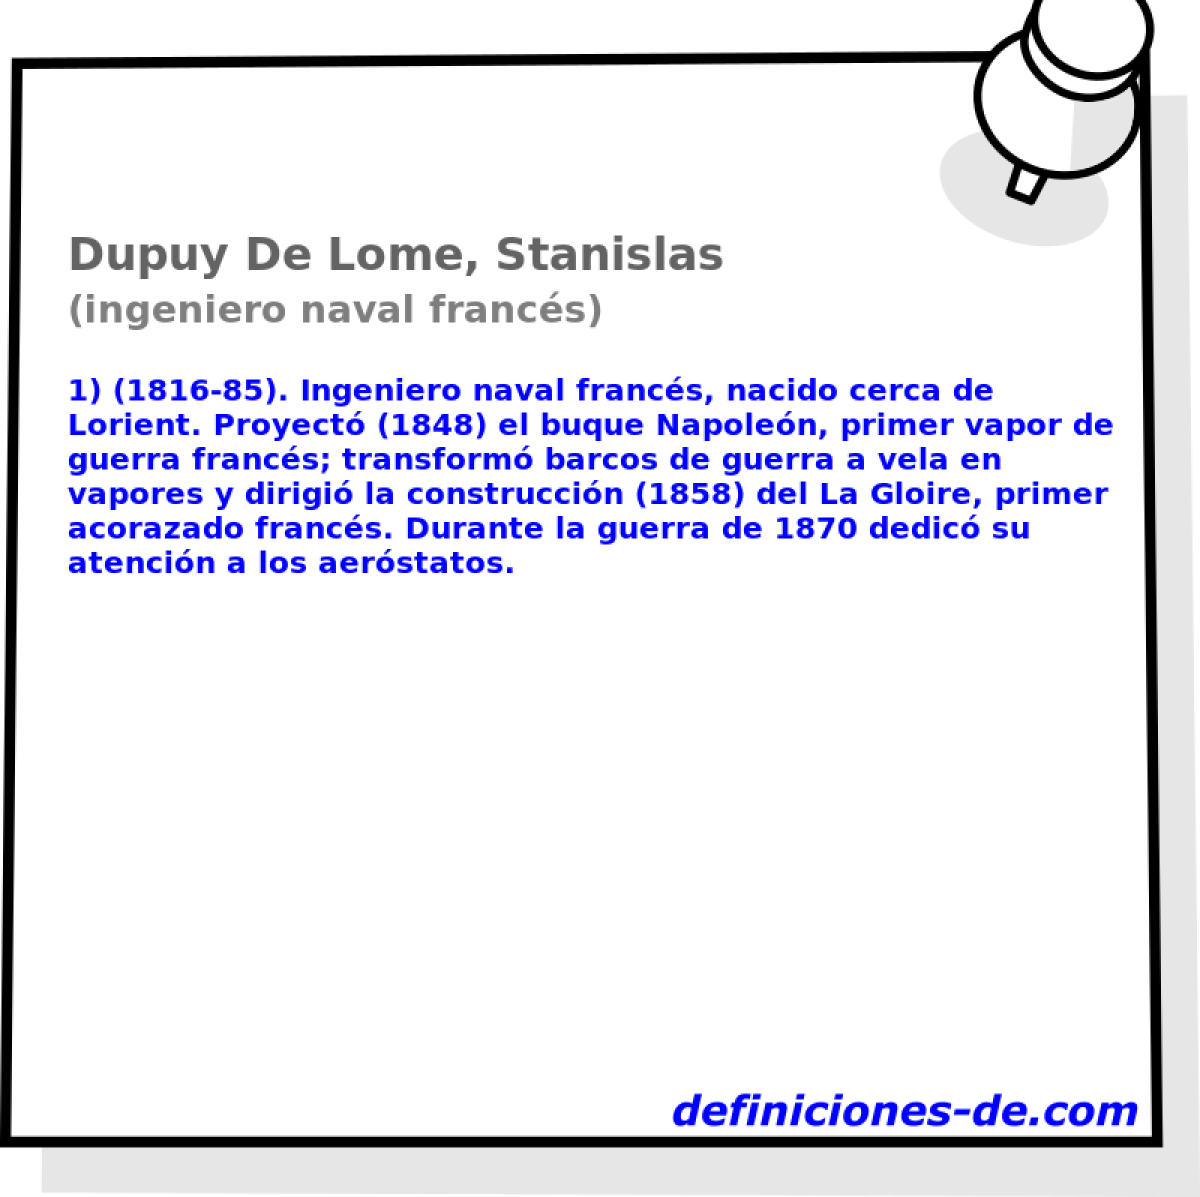 Dupuy De Lome, Stanislas (ingeniero naval francs)